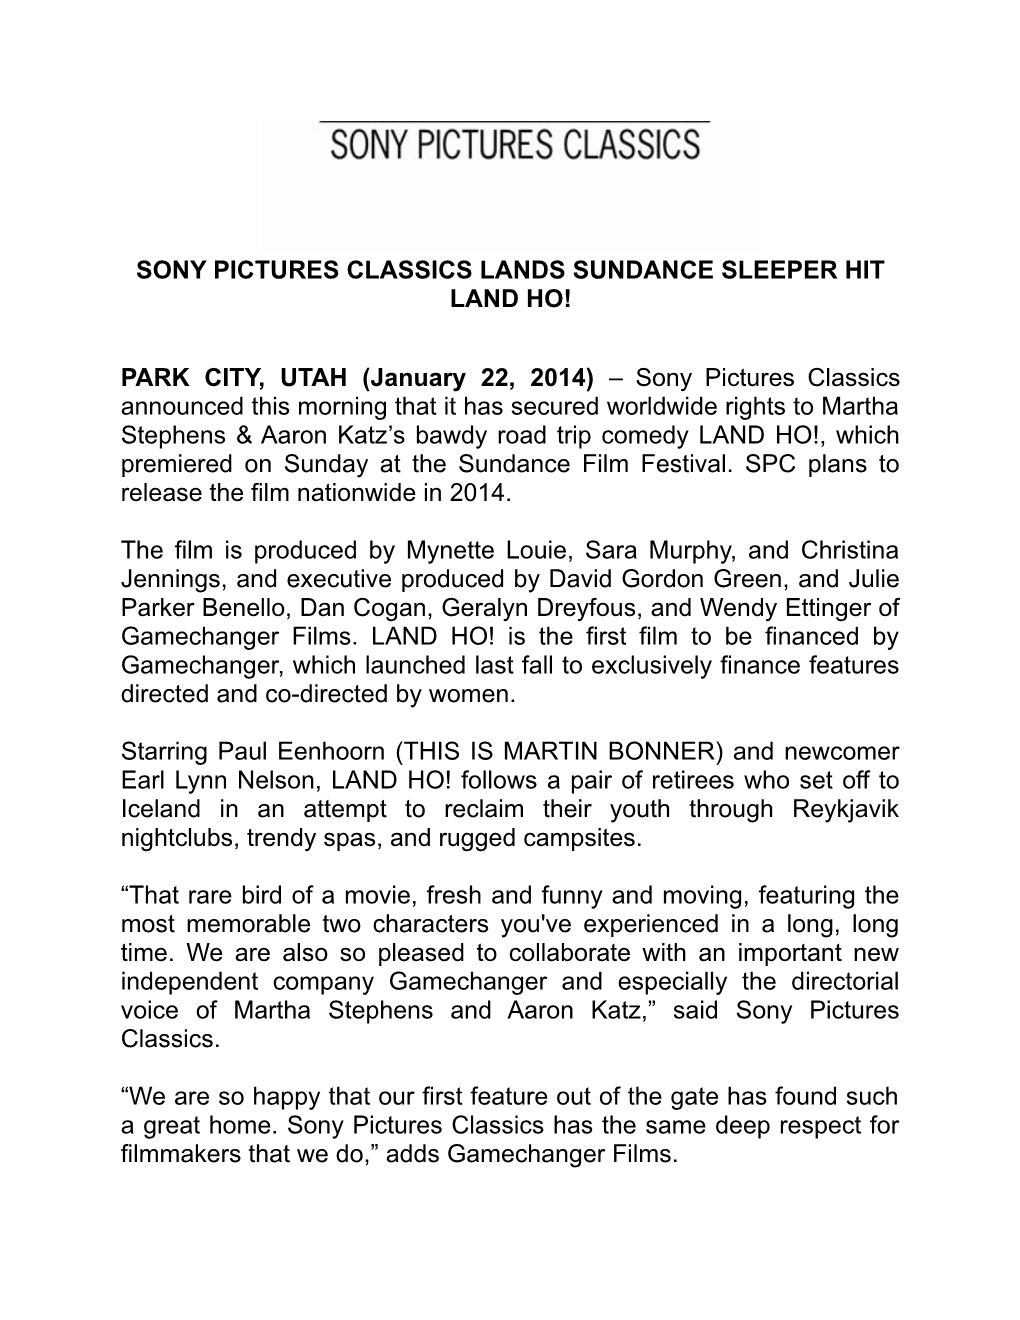 Sony Pictures Classics Lands Sundance Sleeper Hit Land Ho!